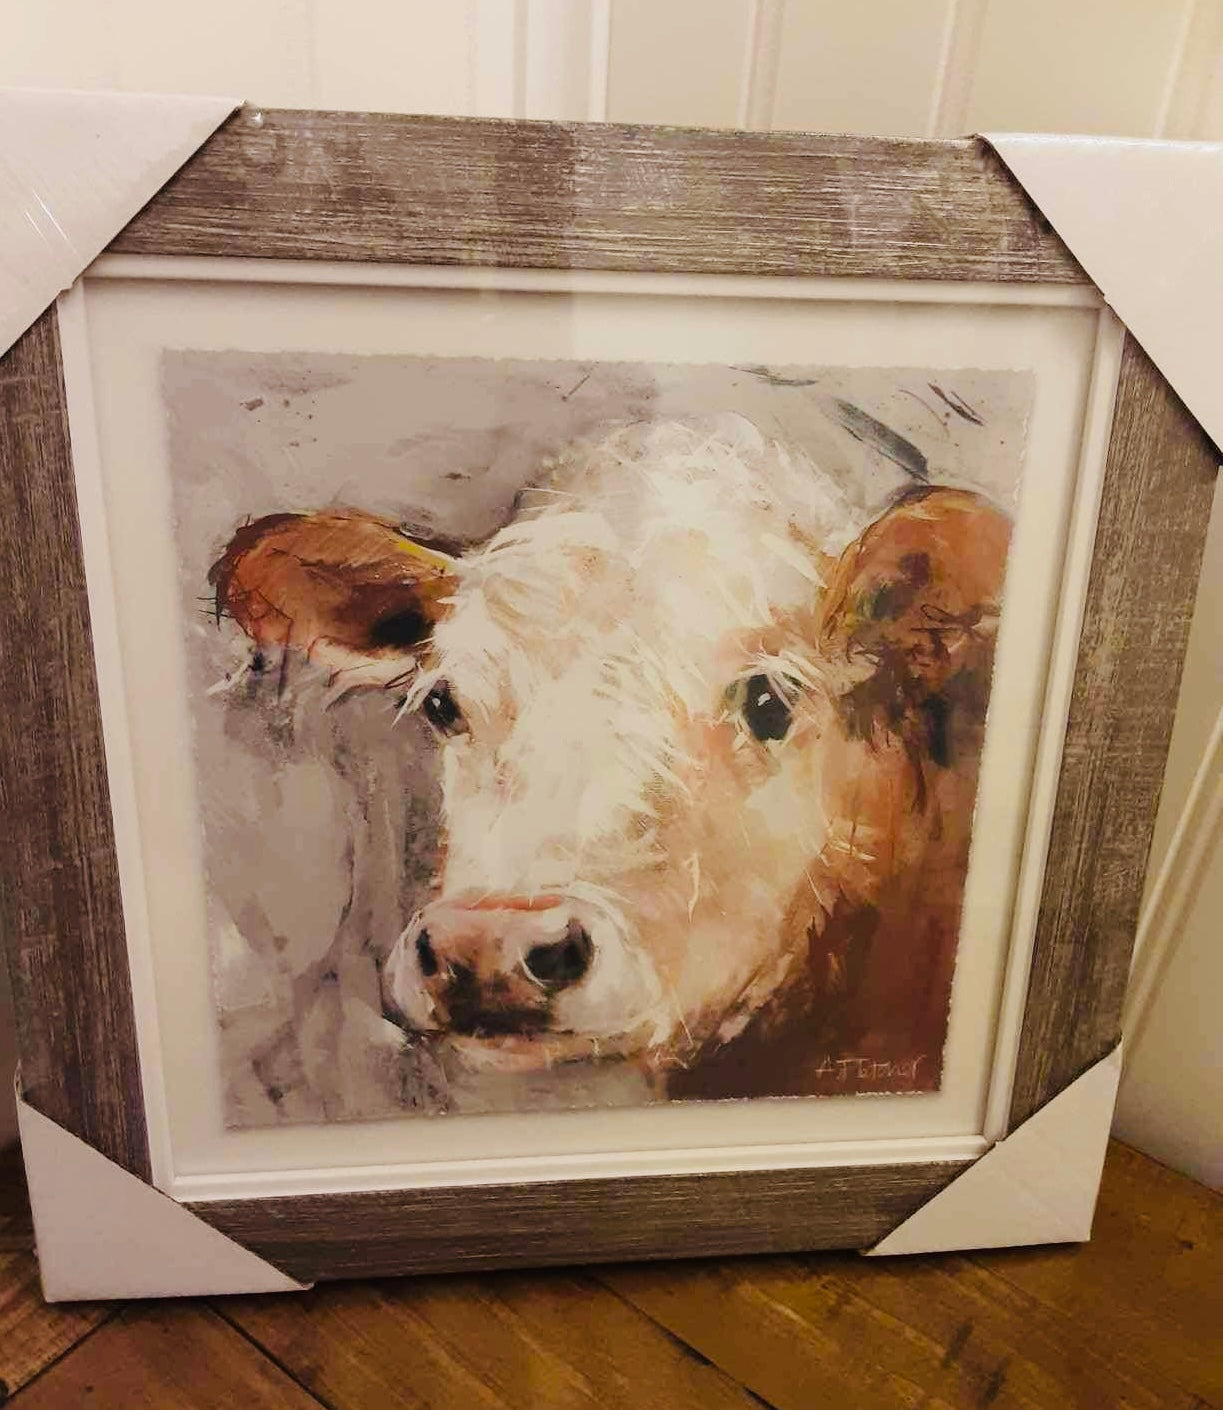 Framed Cow Print